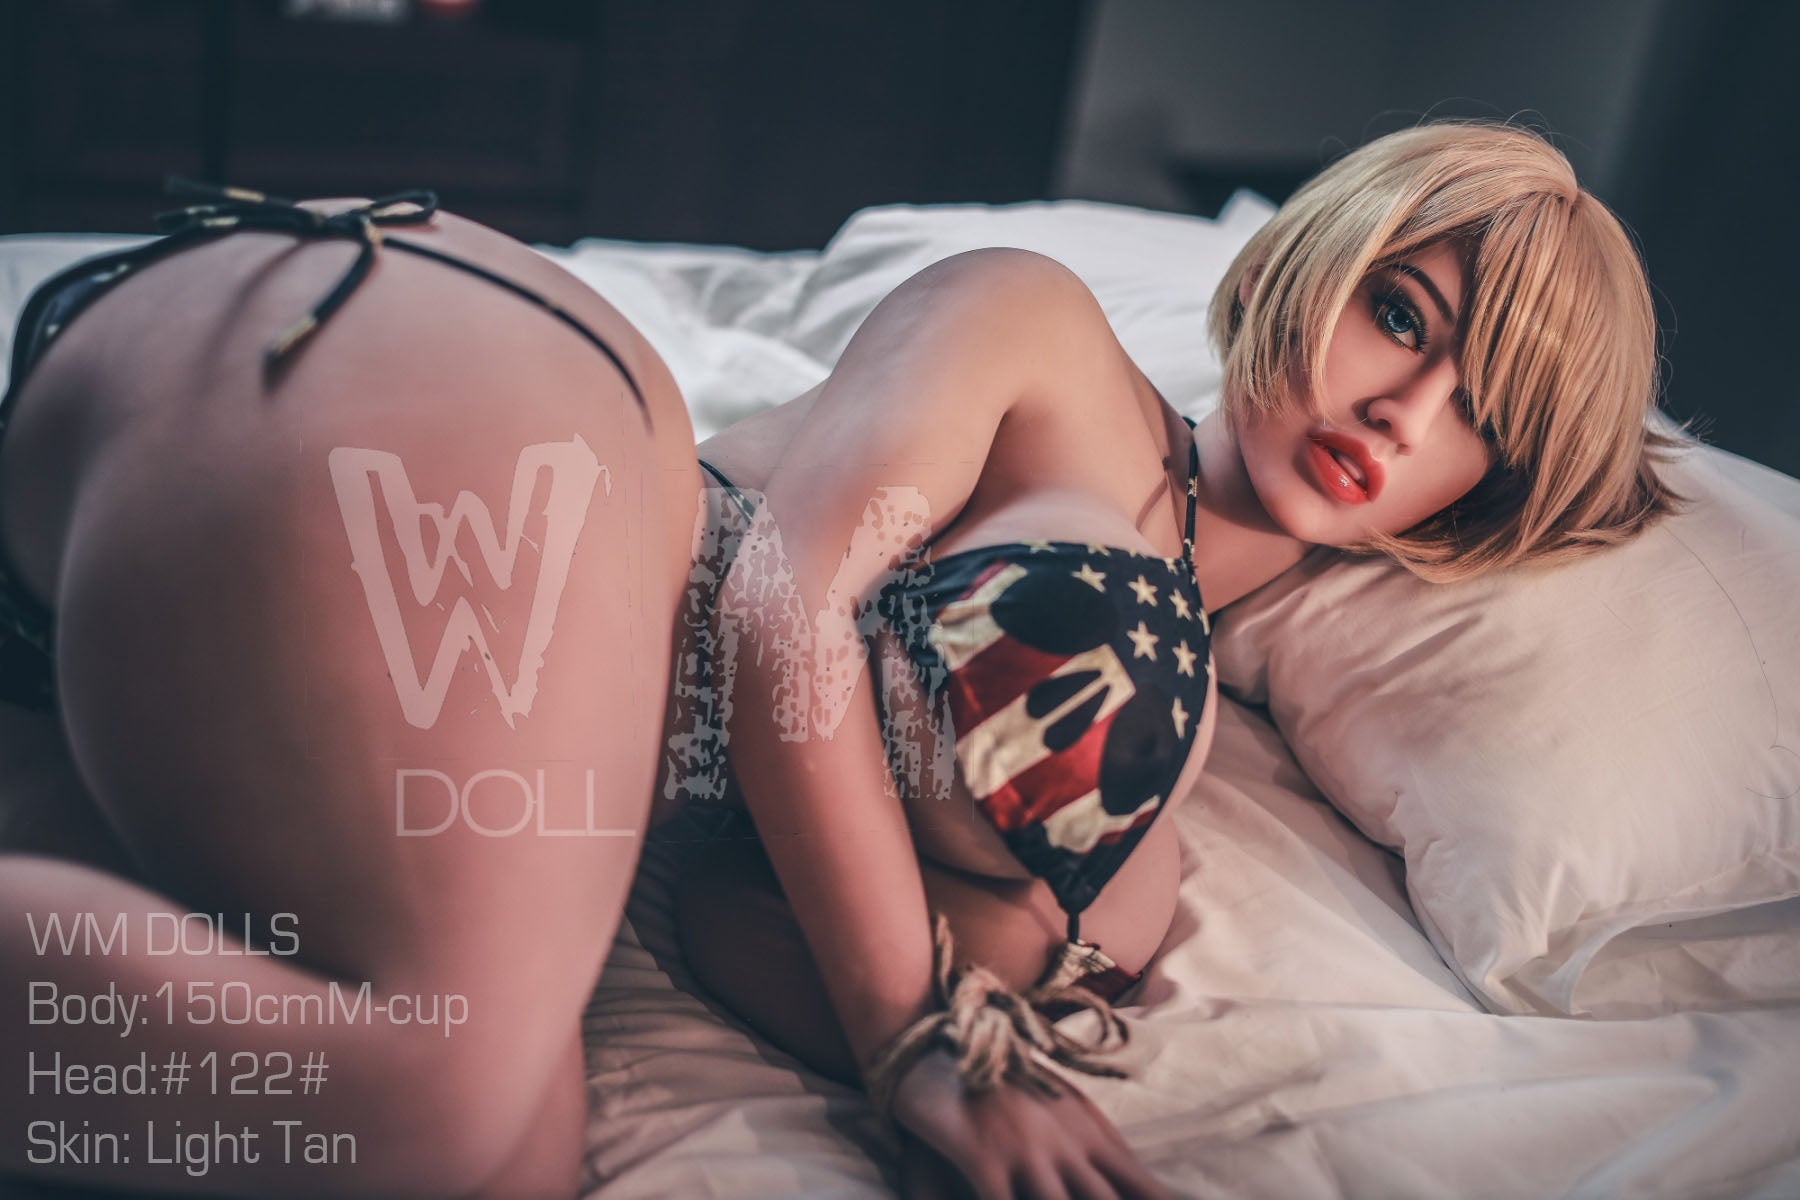 WM DOLL 150 CM M TPE - Kris (USA) | Buy Sex Dolls at DOLLS ACTUALLY